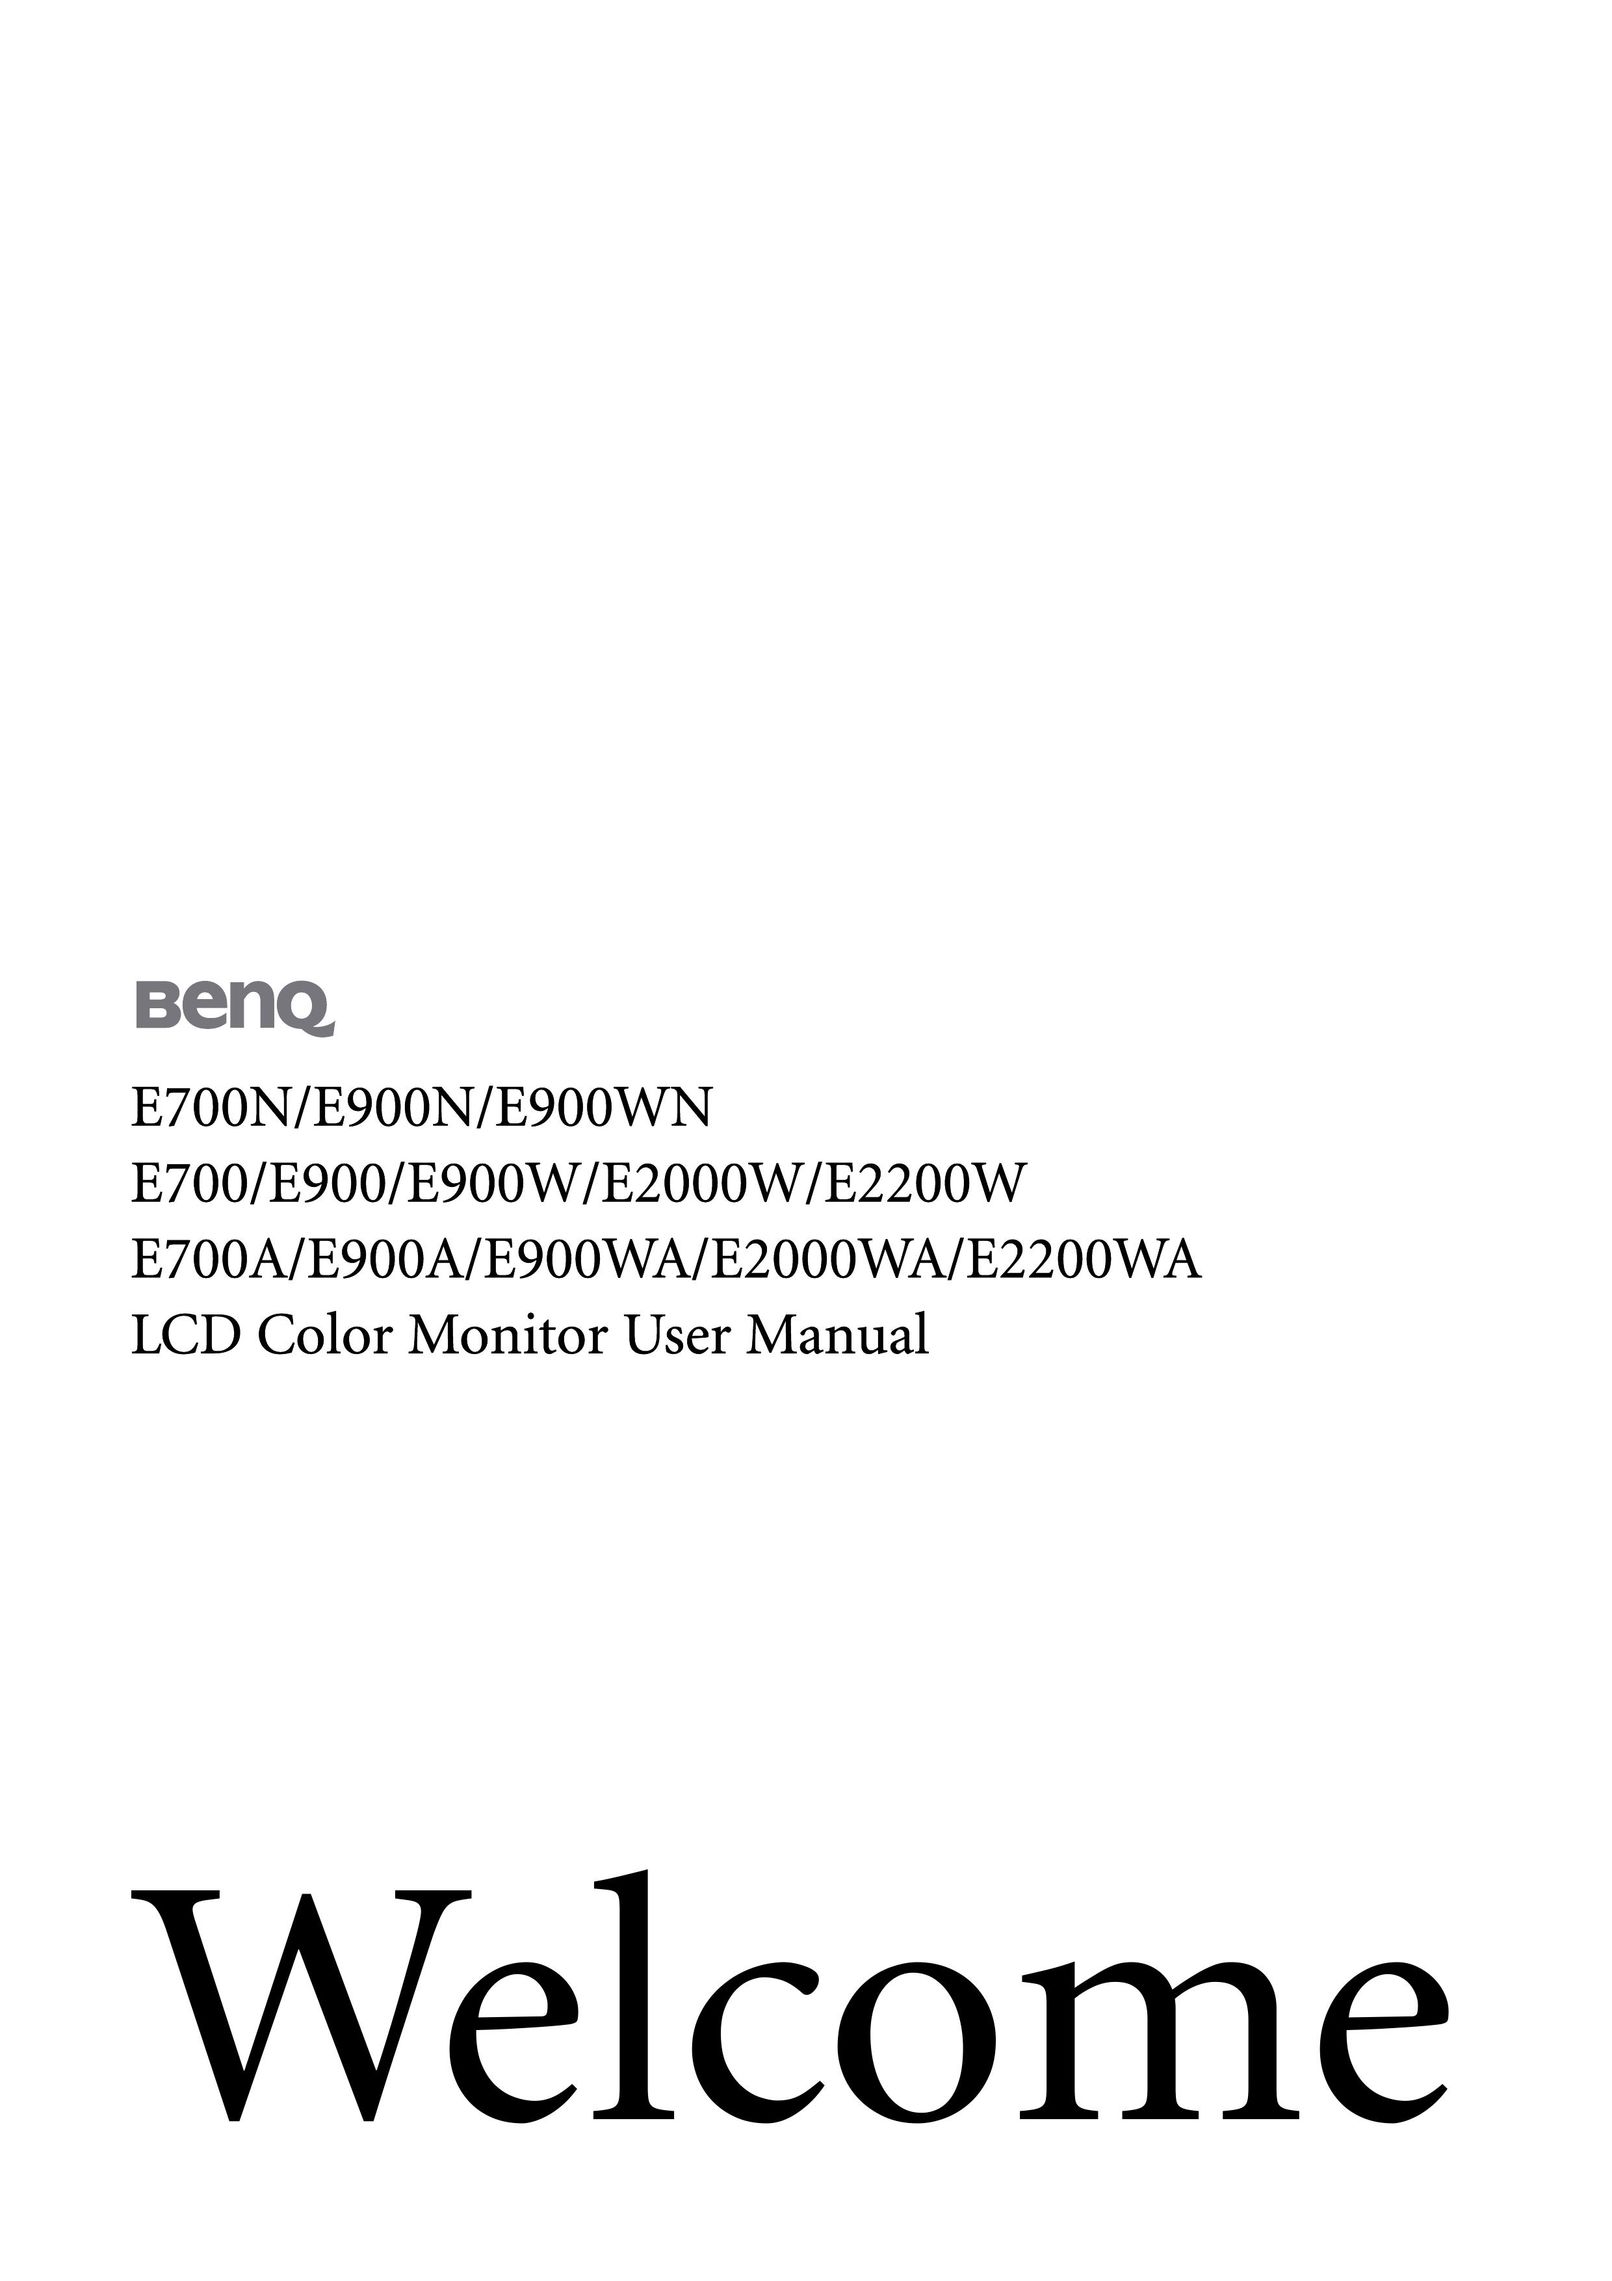 BenQ E2000W Computer Monitor User Manual